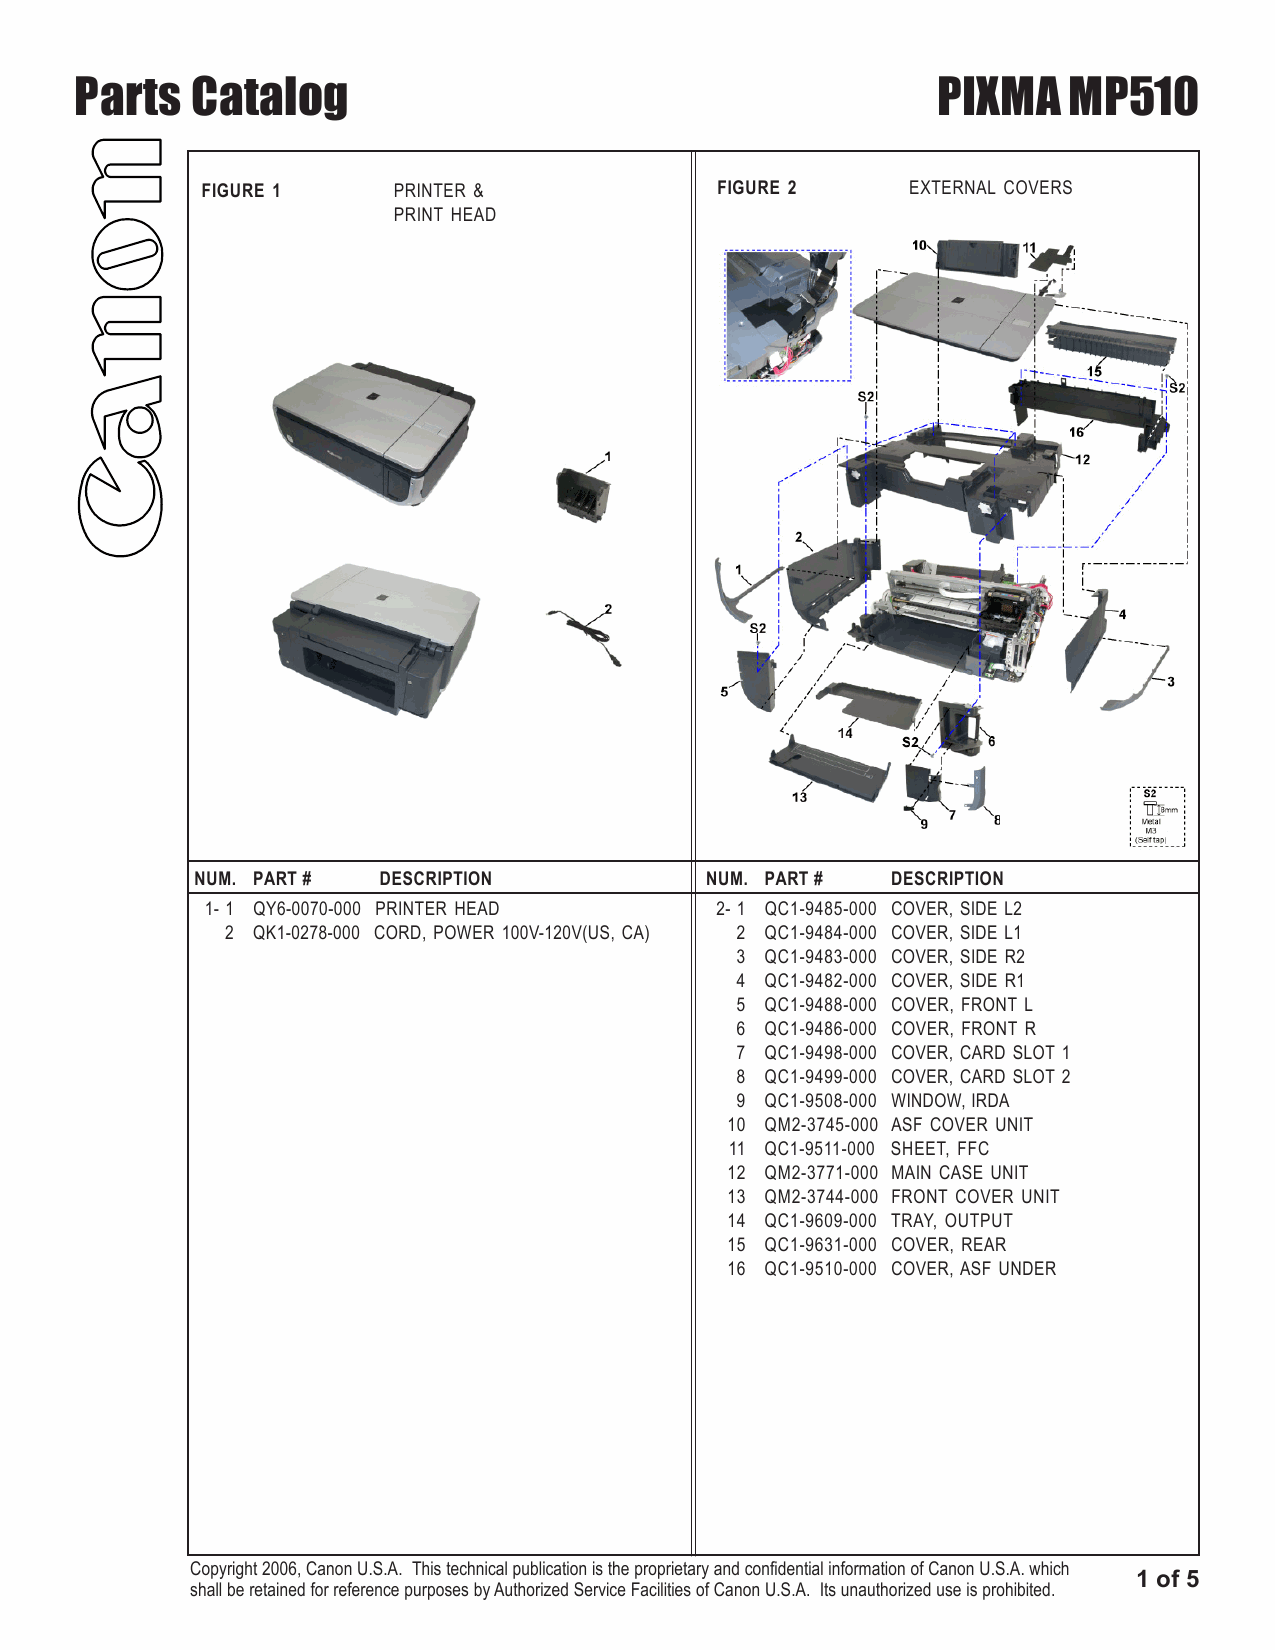 Canon PIXMA MP510 Parts Catalog Manual